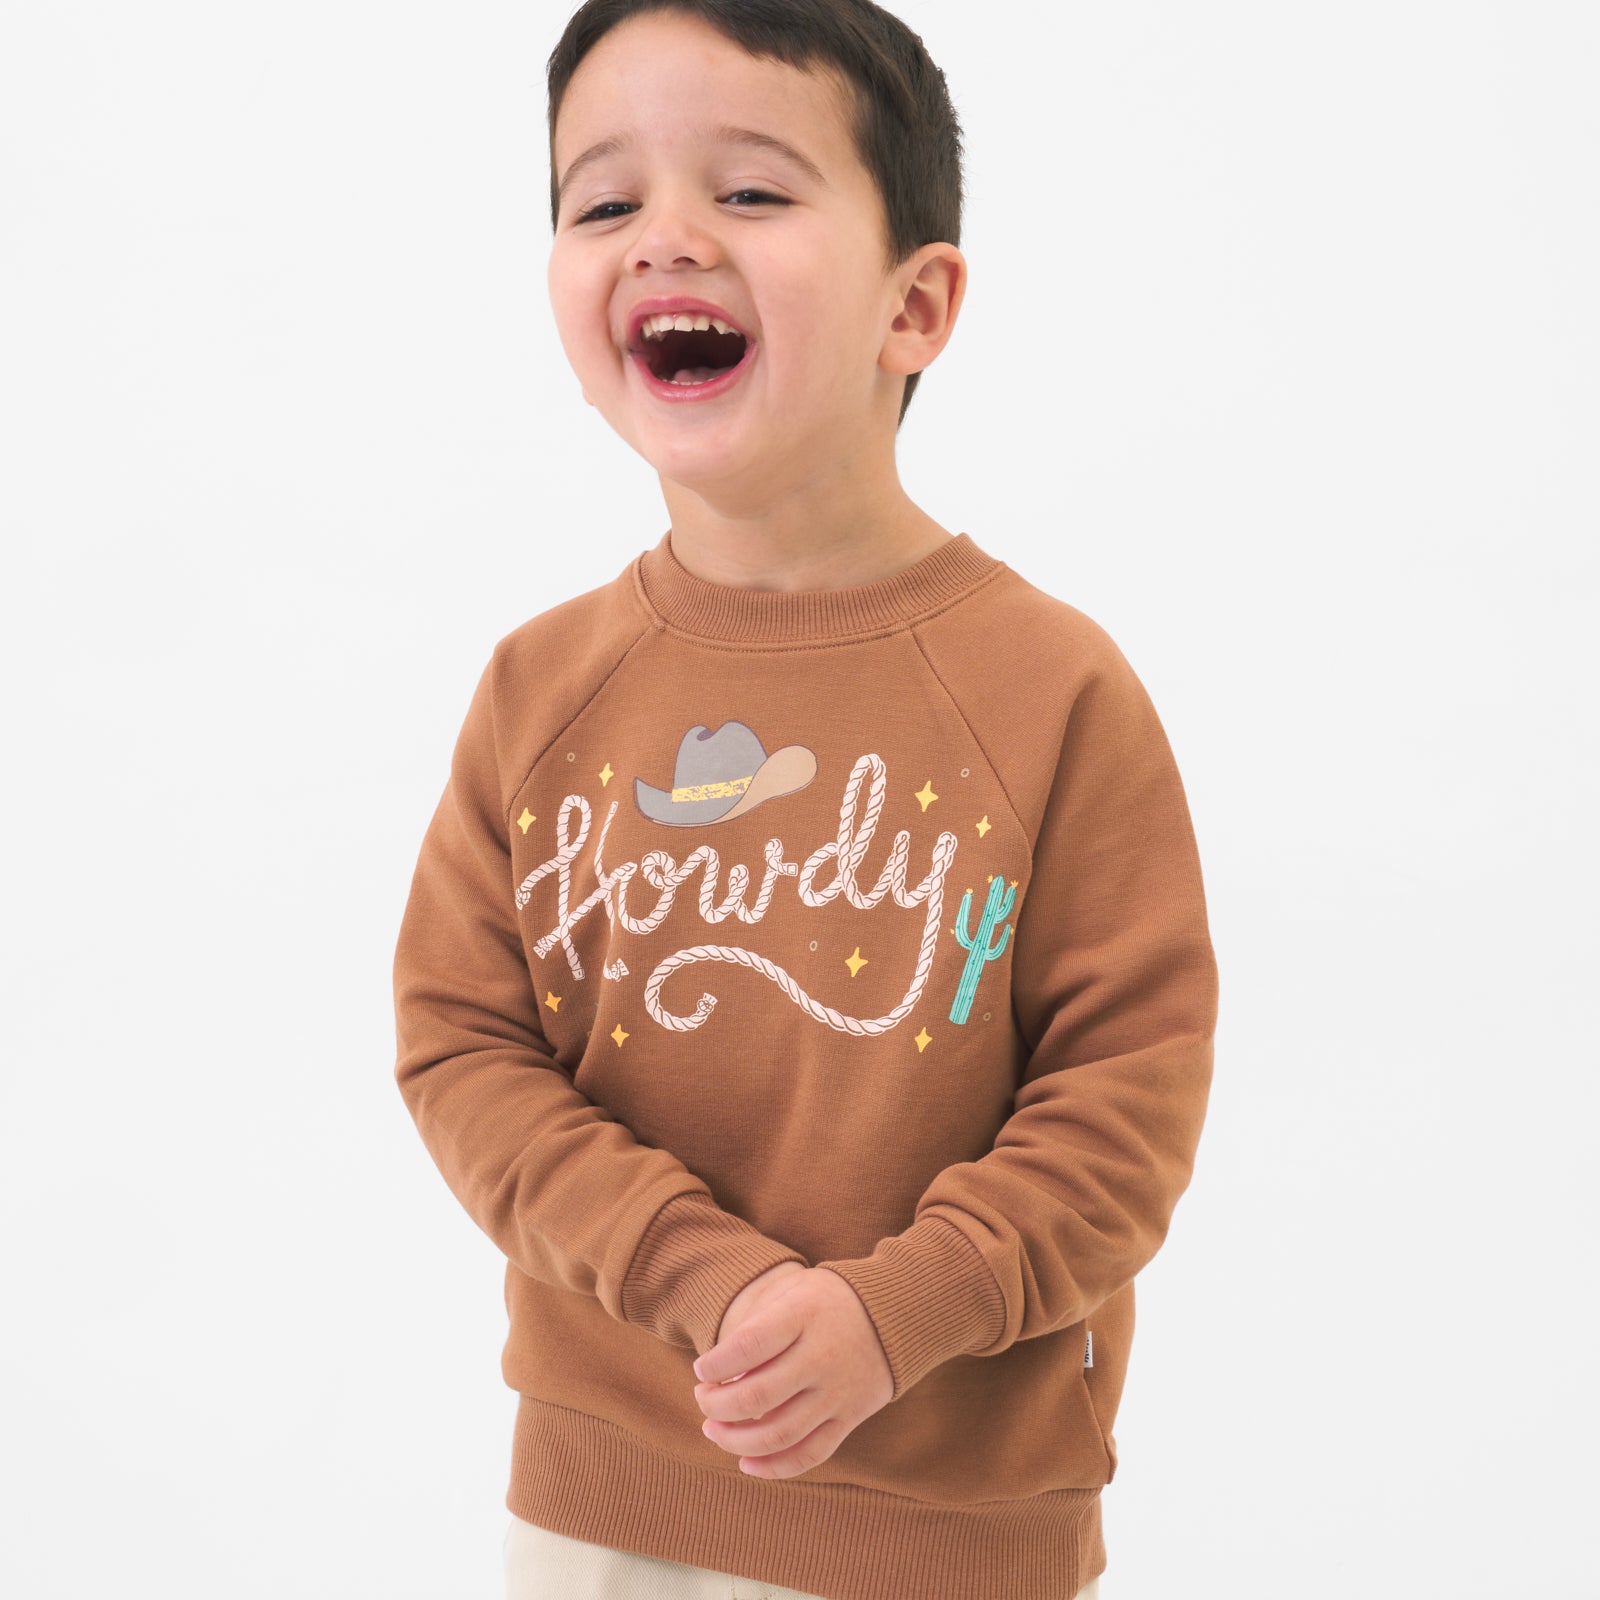 Alternate image of a child wearing a Howdy crewneck sweatshirt